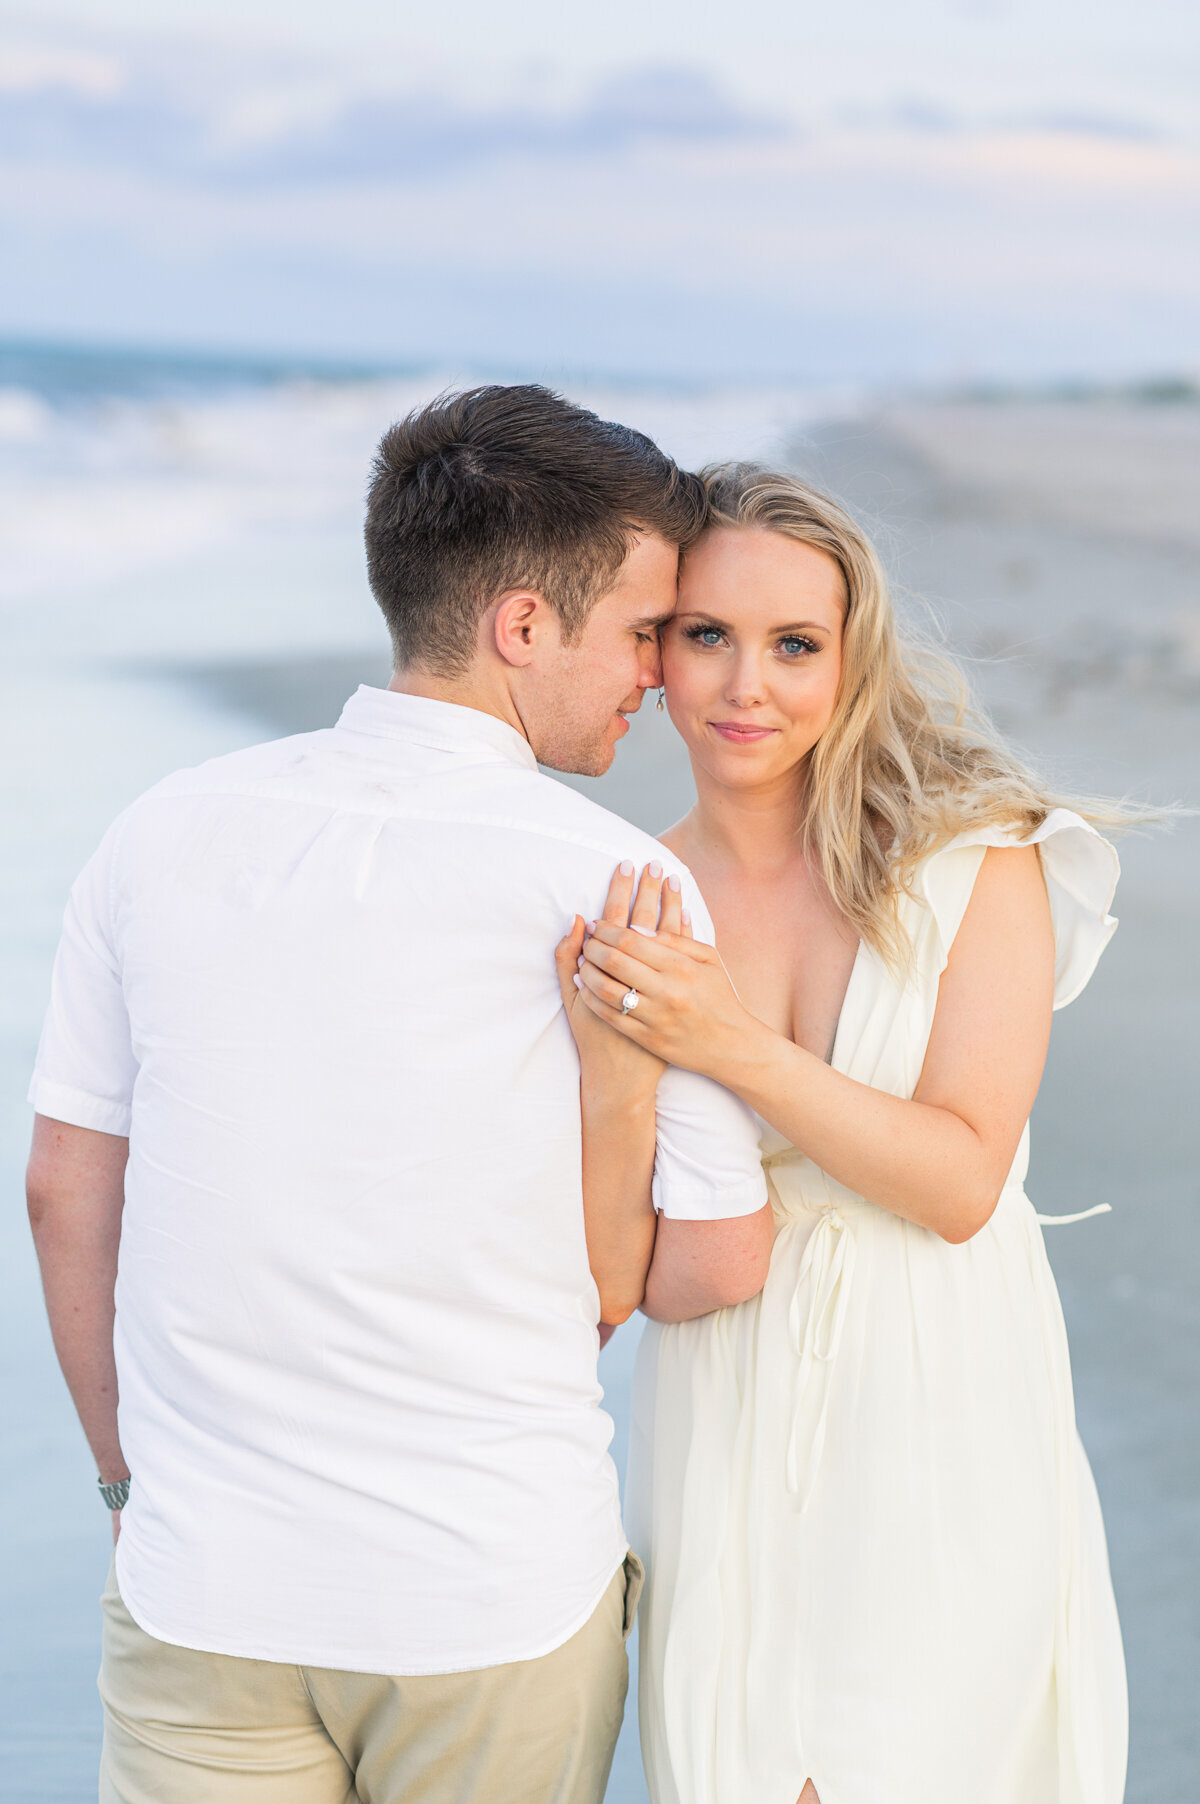 Sarah & Kevin Melbourne Beach Florida Engagement | Lisa Marshall Photography 3